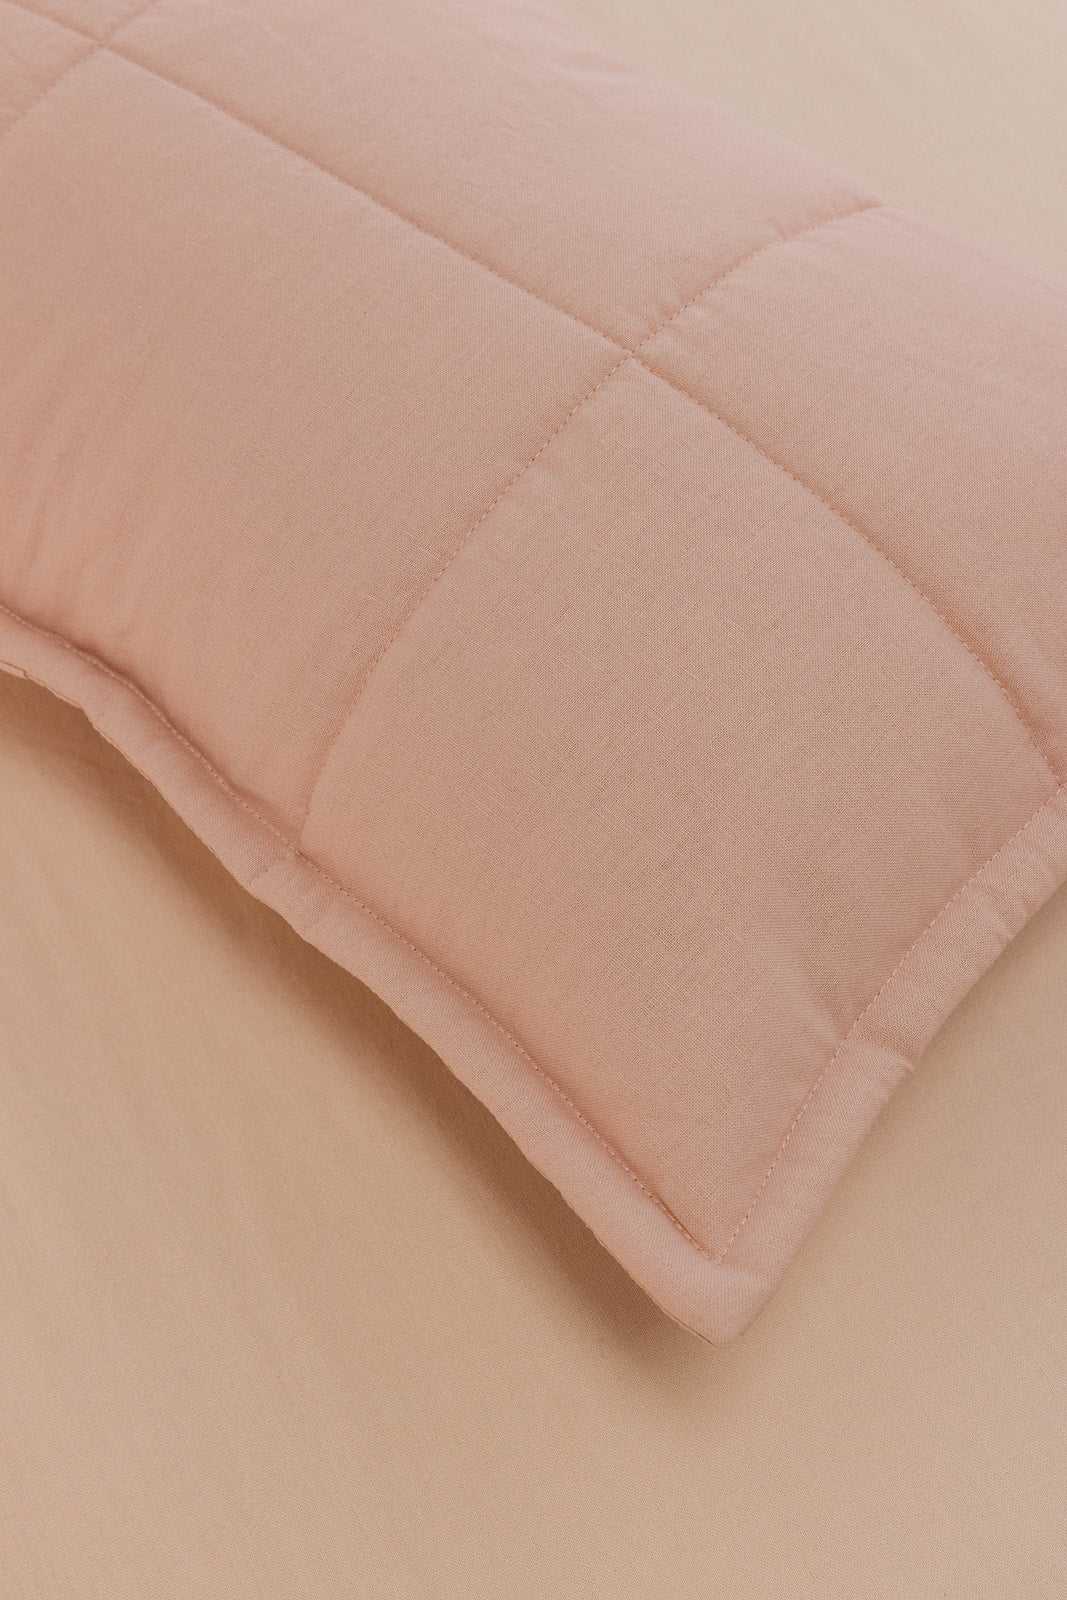 Waxwing - Linen Quilted Sham & Pillow